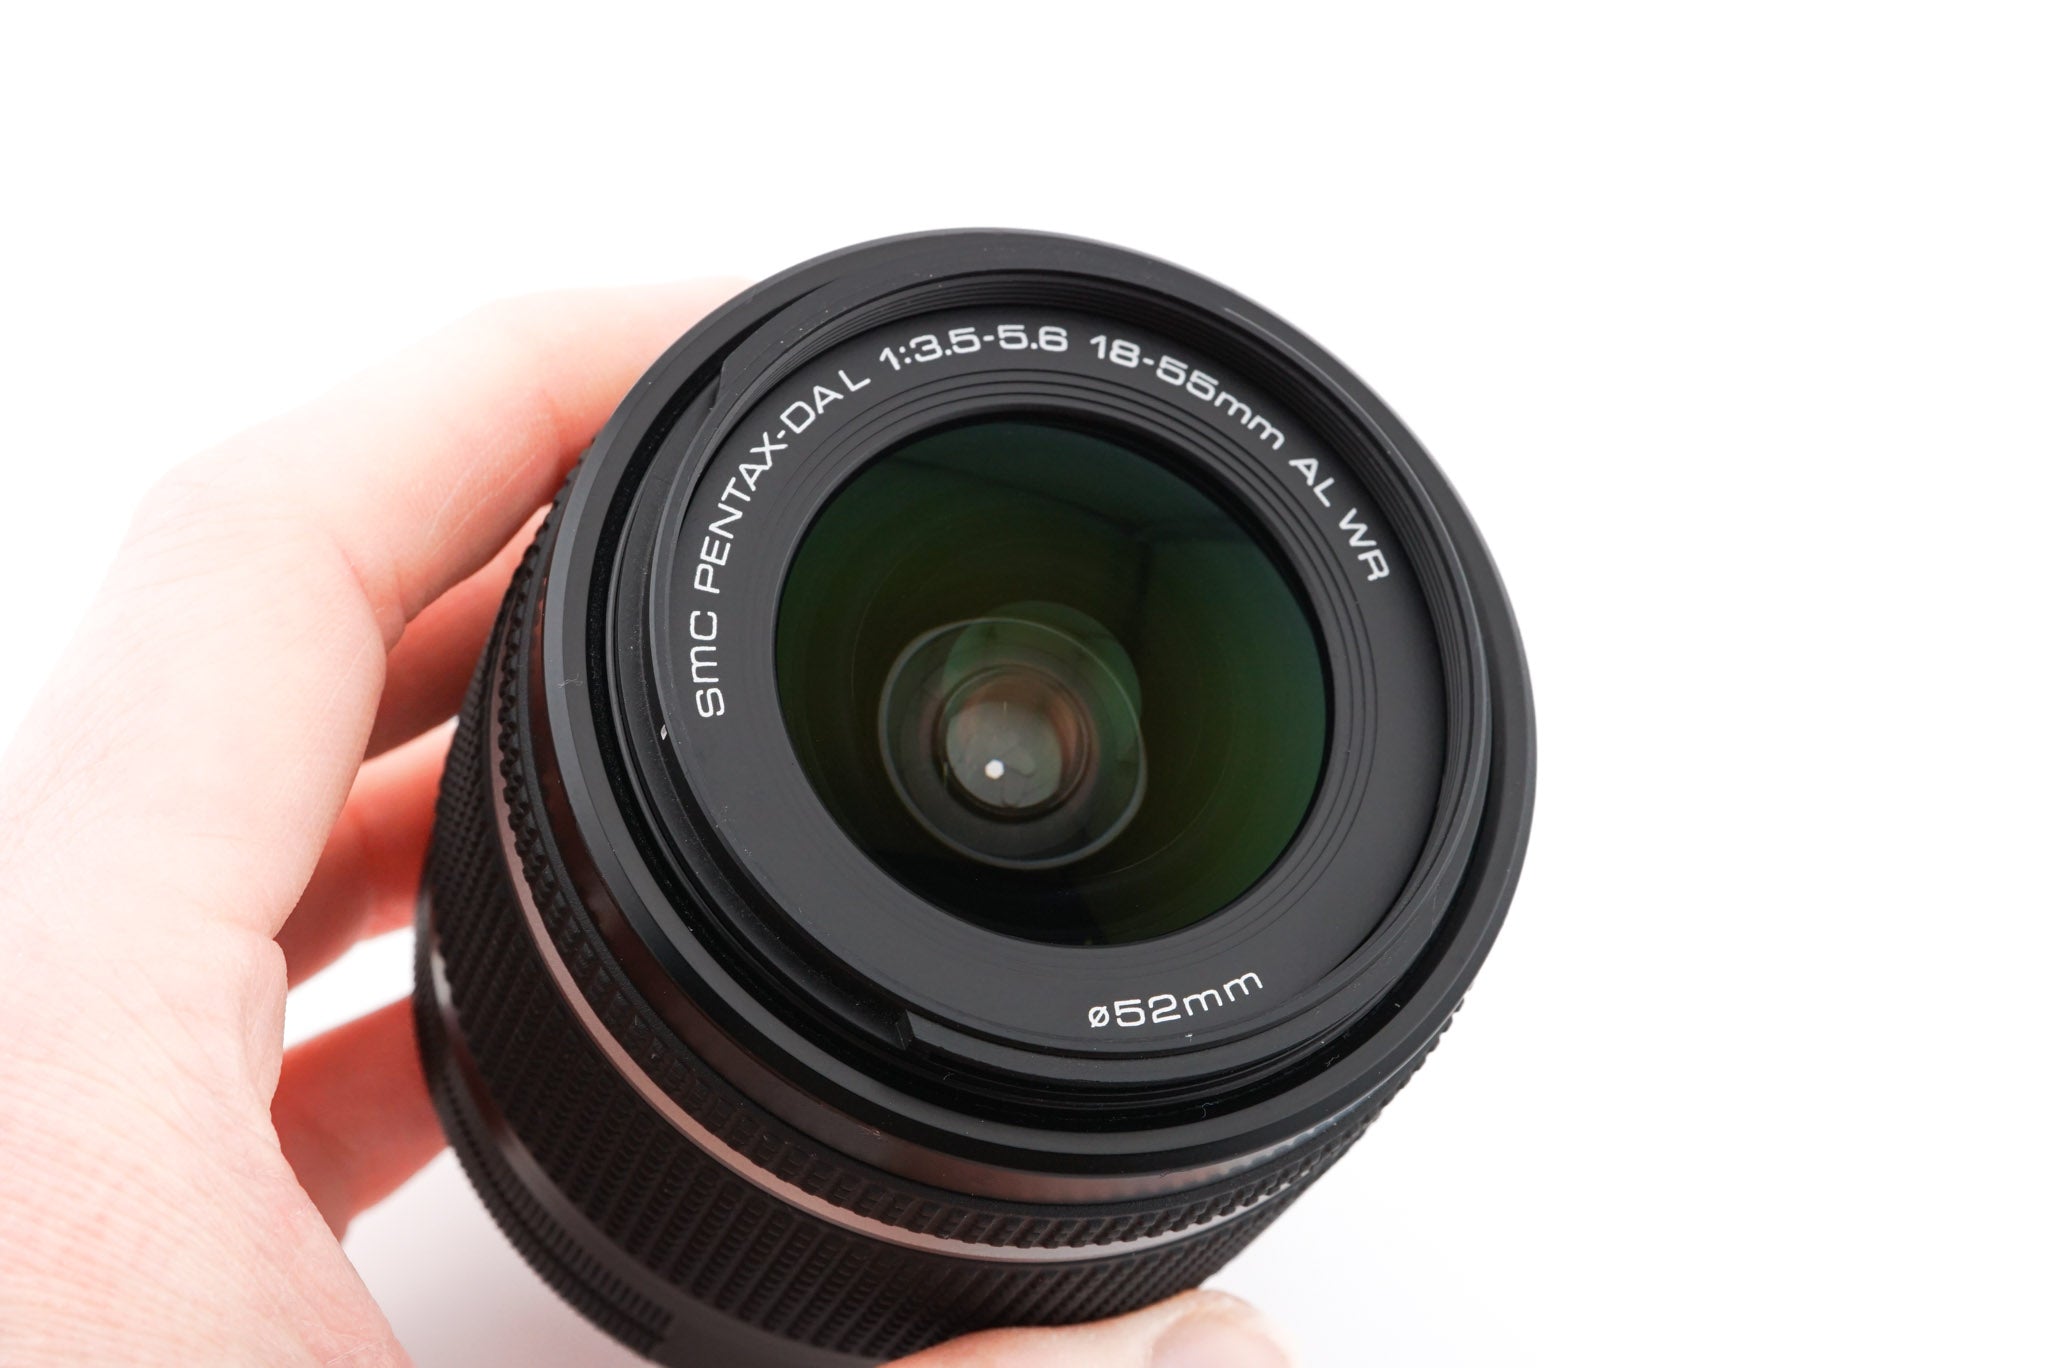 Pentax 18-55mm f3.5-5.6 SMC DA L AL WR – Kamerastore